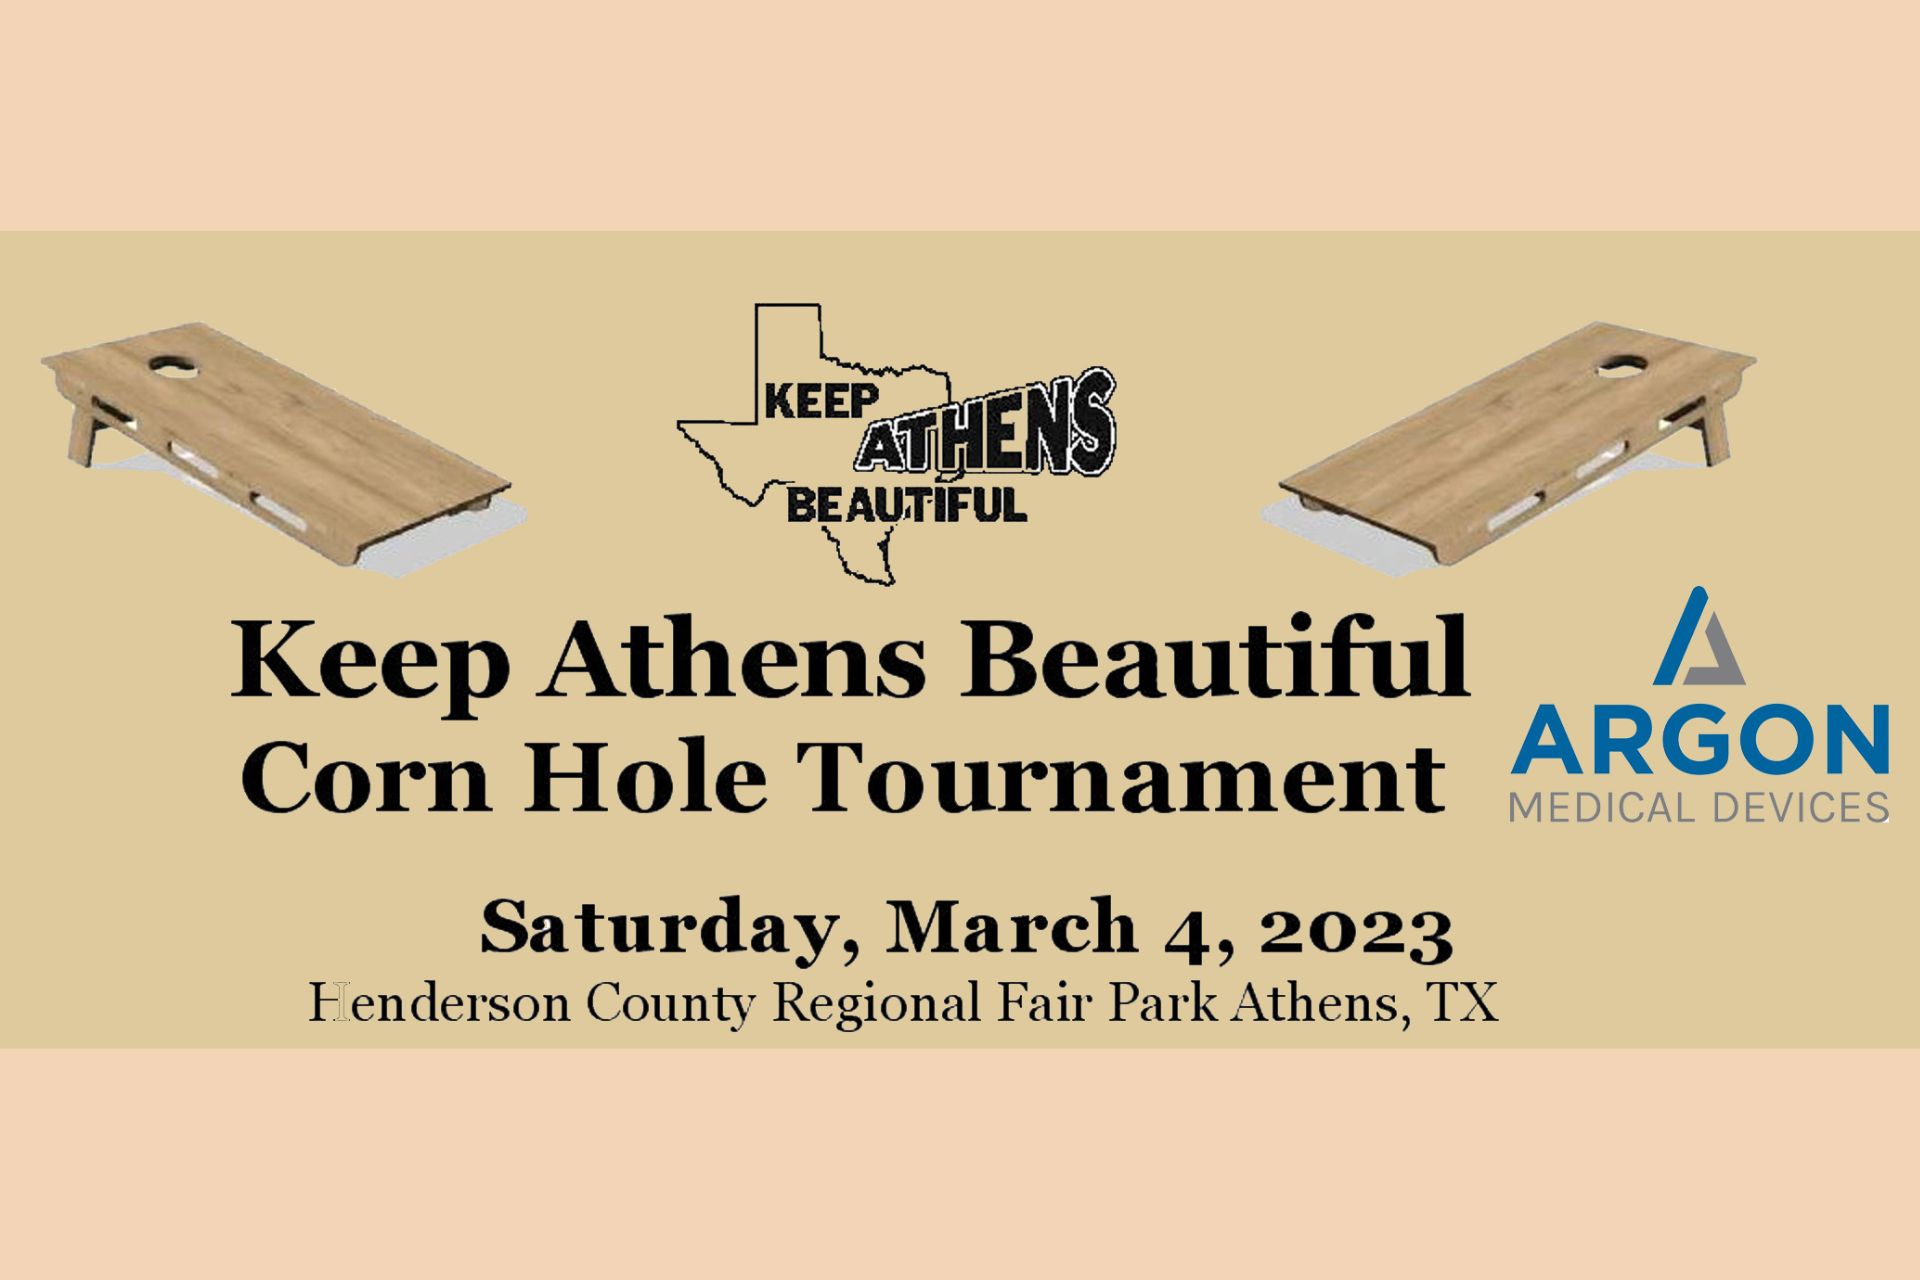 Keep Athens Beautiful Corn Hole Tournament